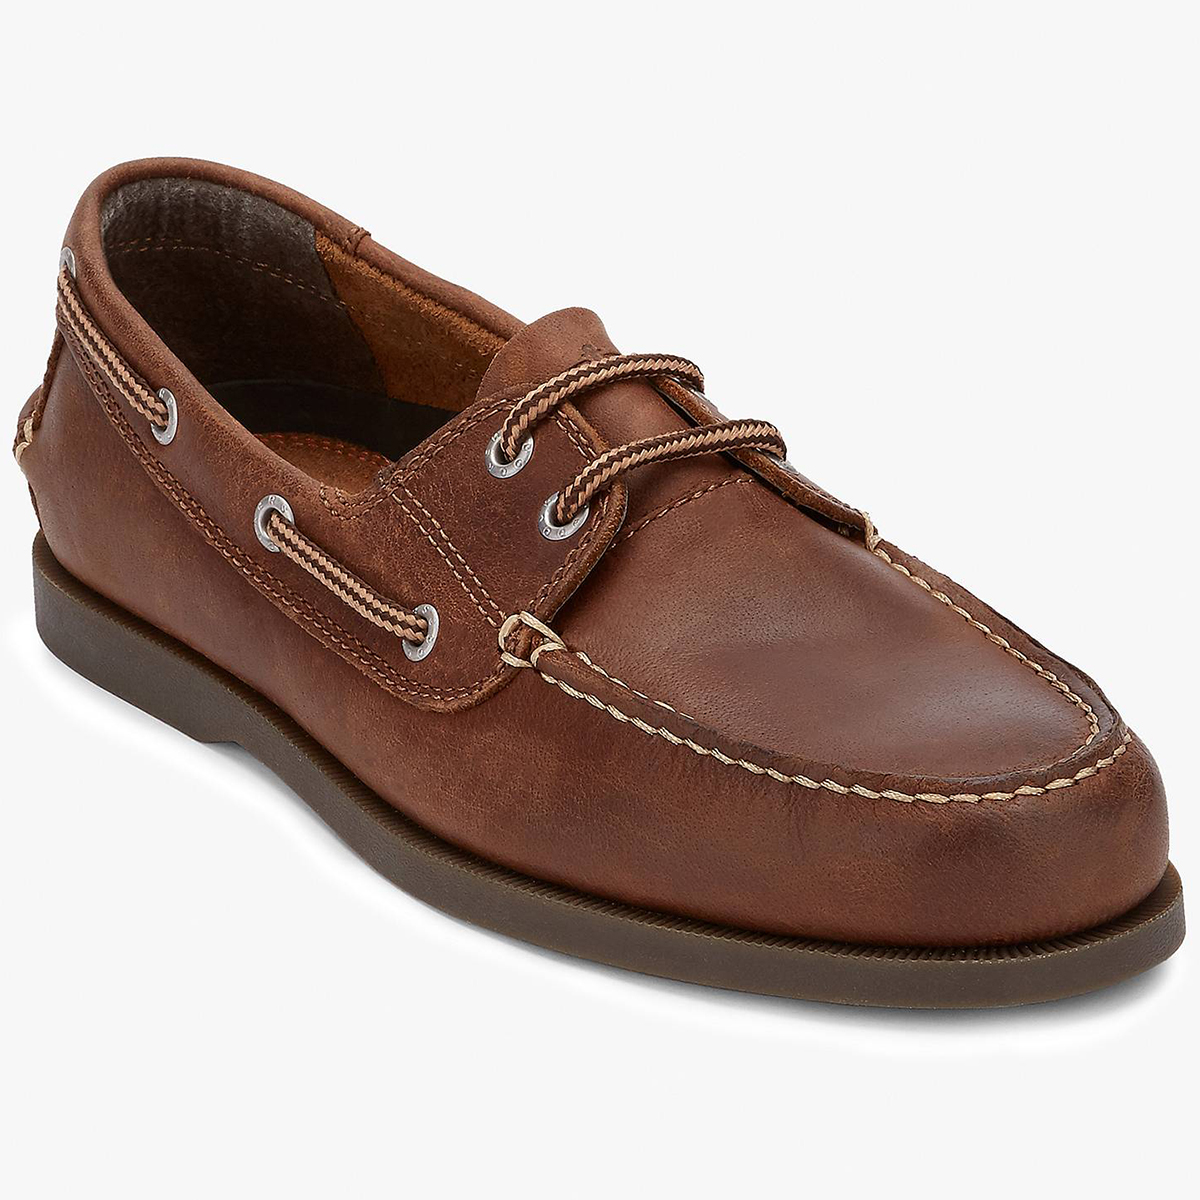 Dockers Men's Vargas Boat Shoes, Wide - Brown, 10.5